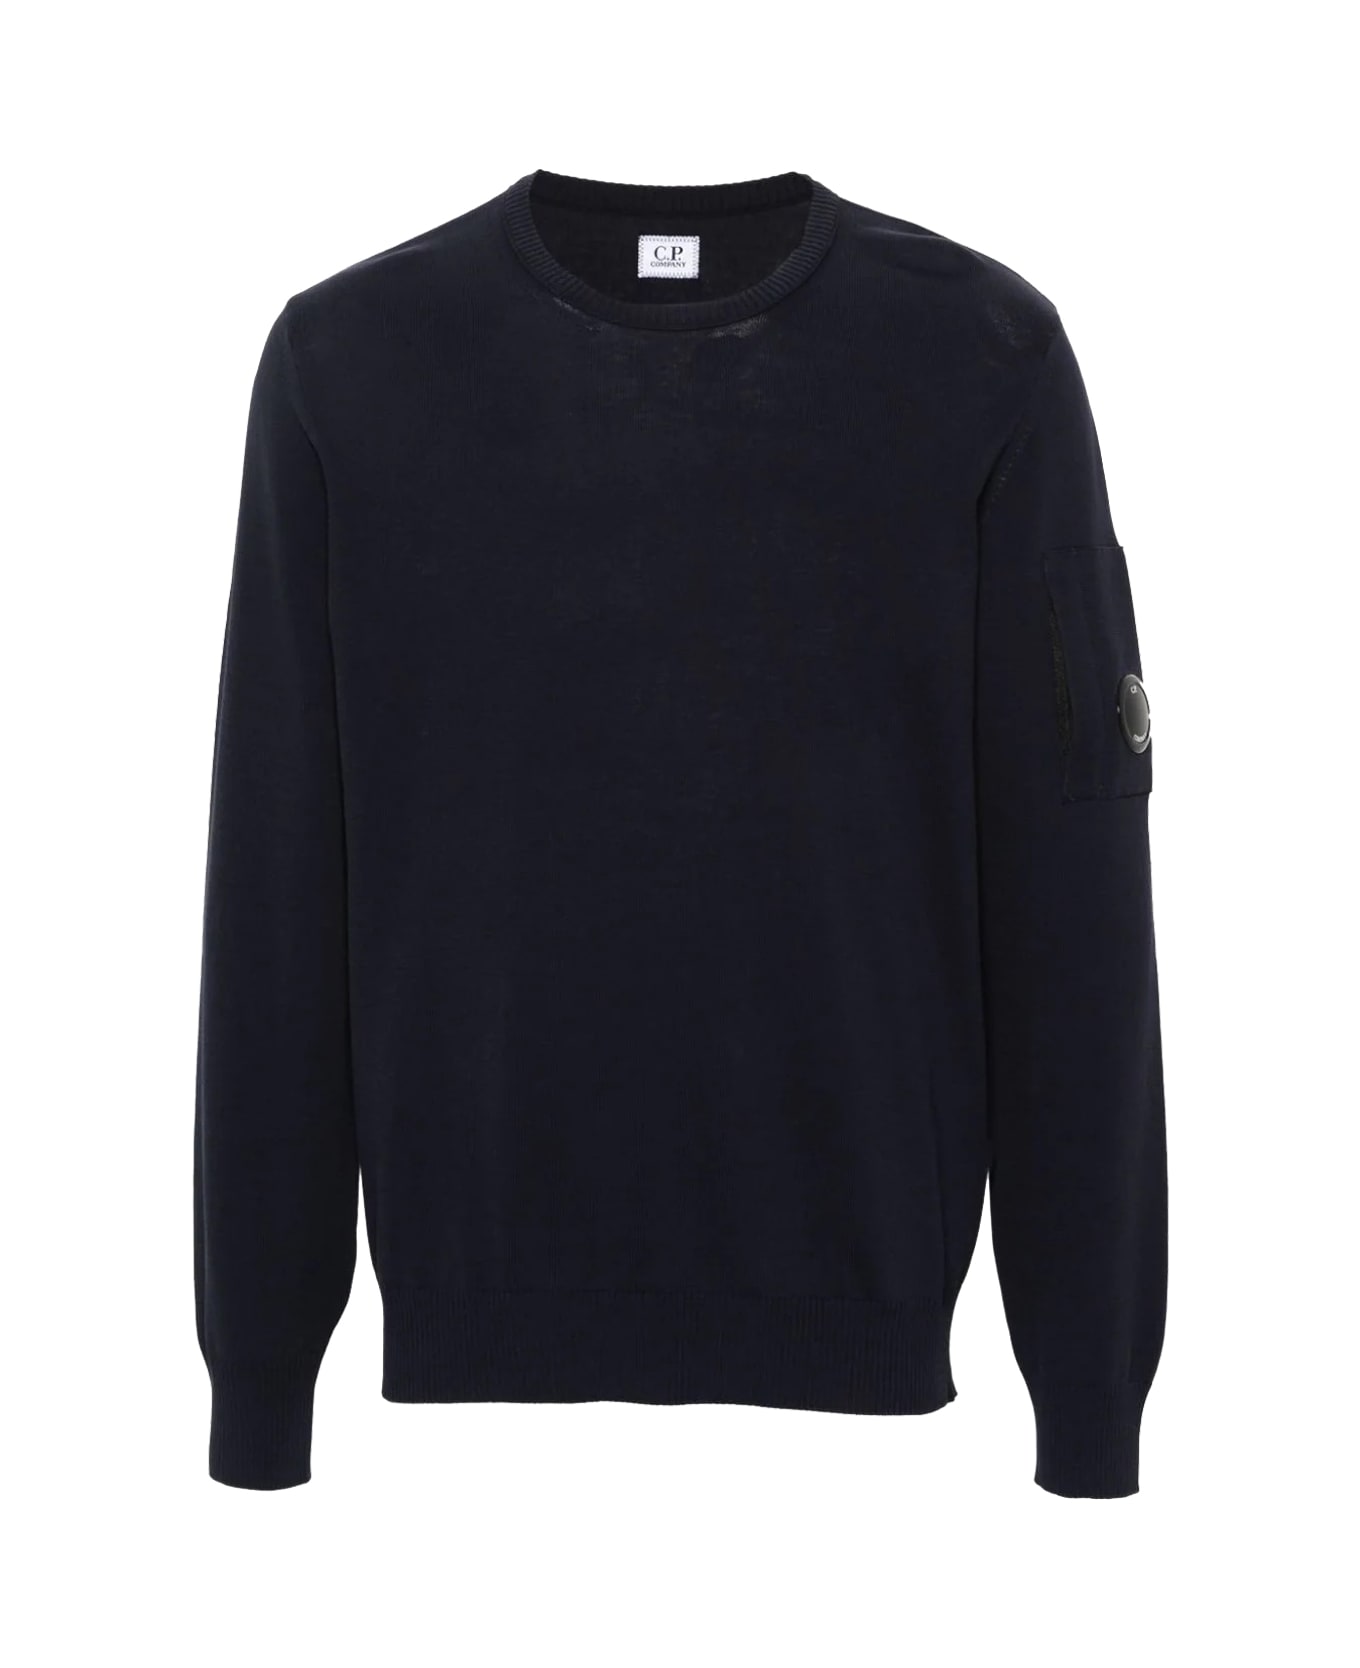 C.P. Company Sweater - Total Eclipse ニットウェア